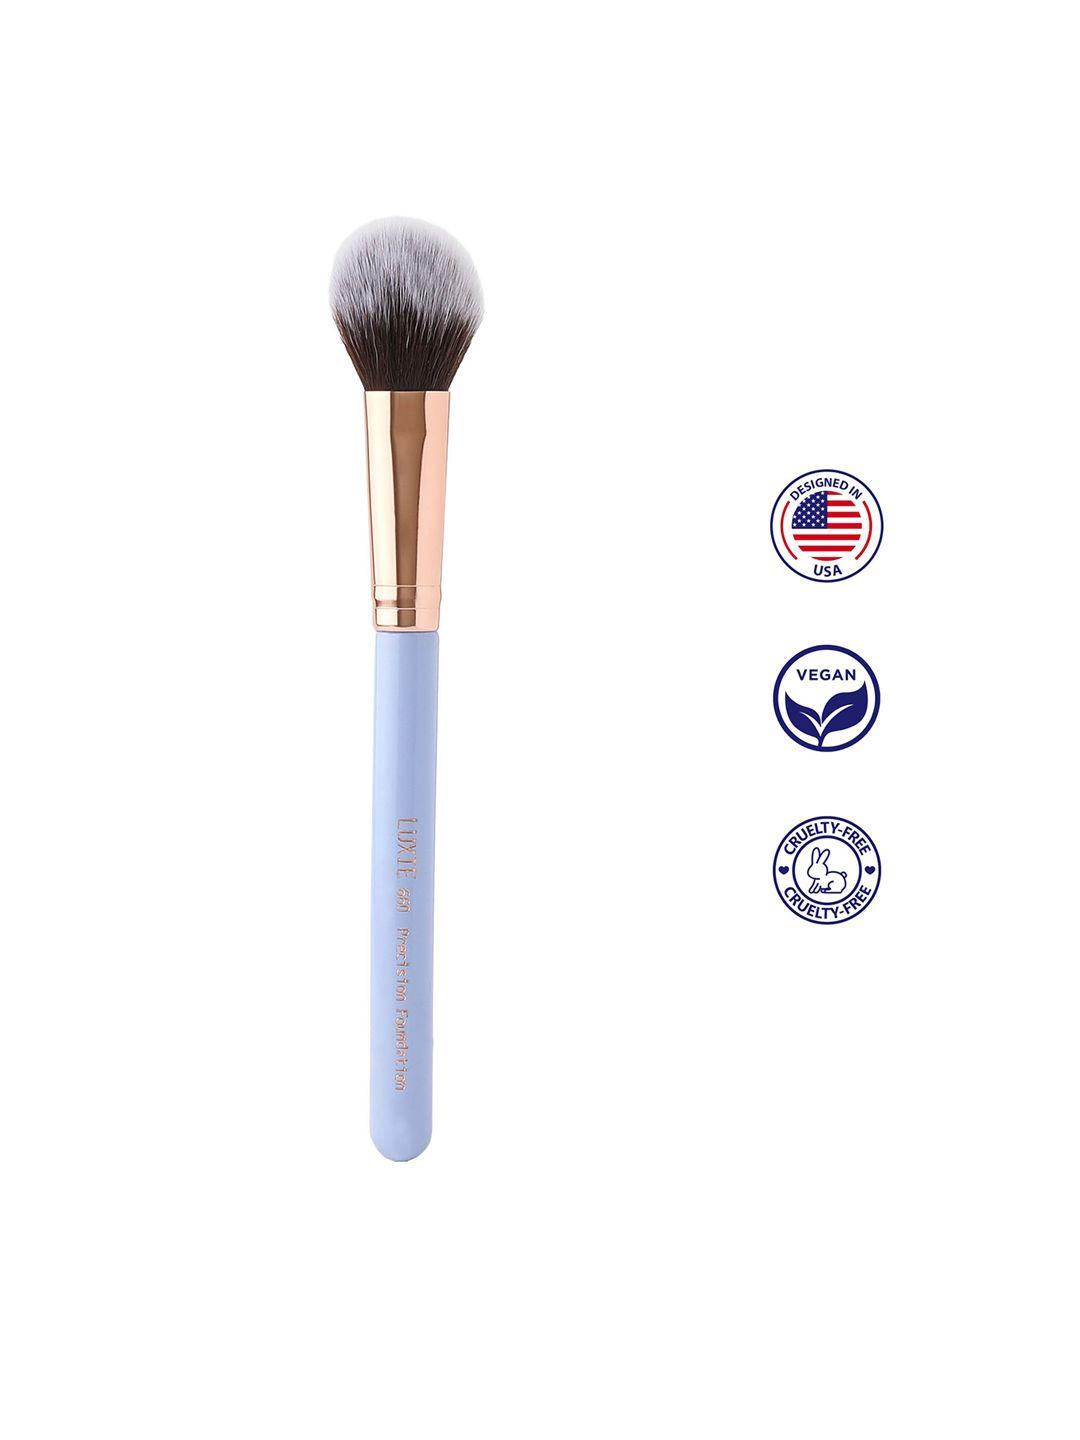 luxie blue precision foundation dreamcatcher brush - 660